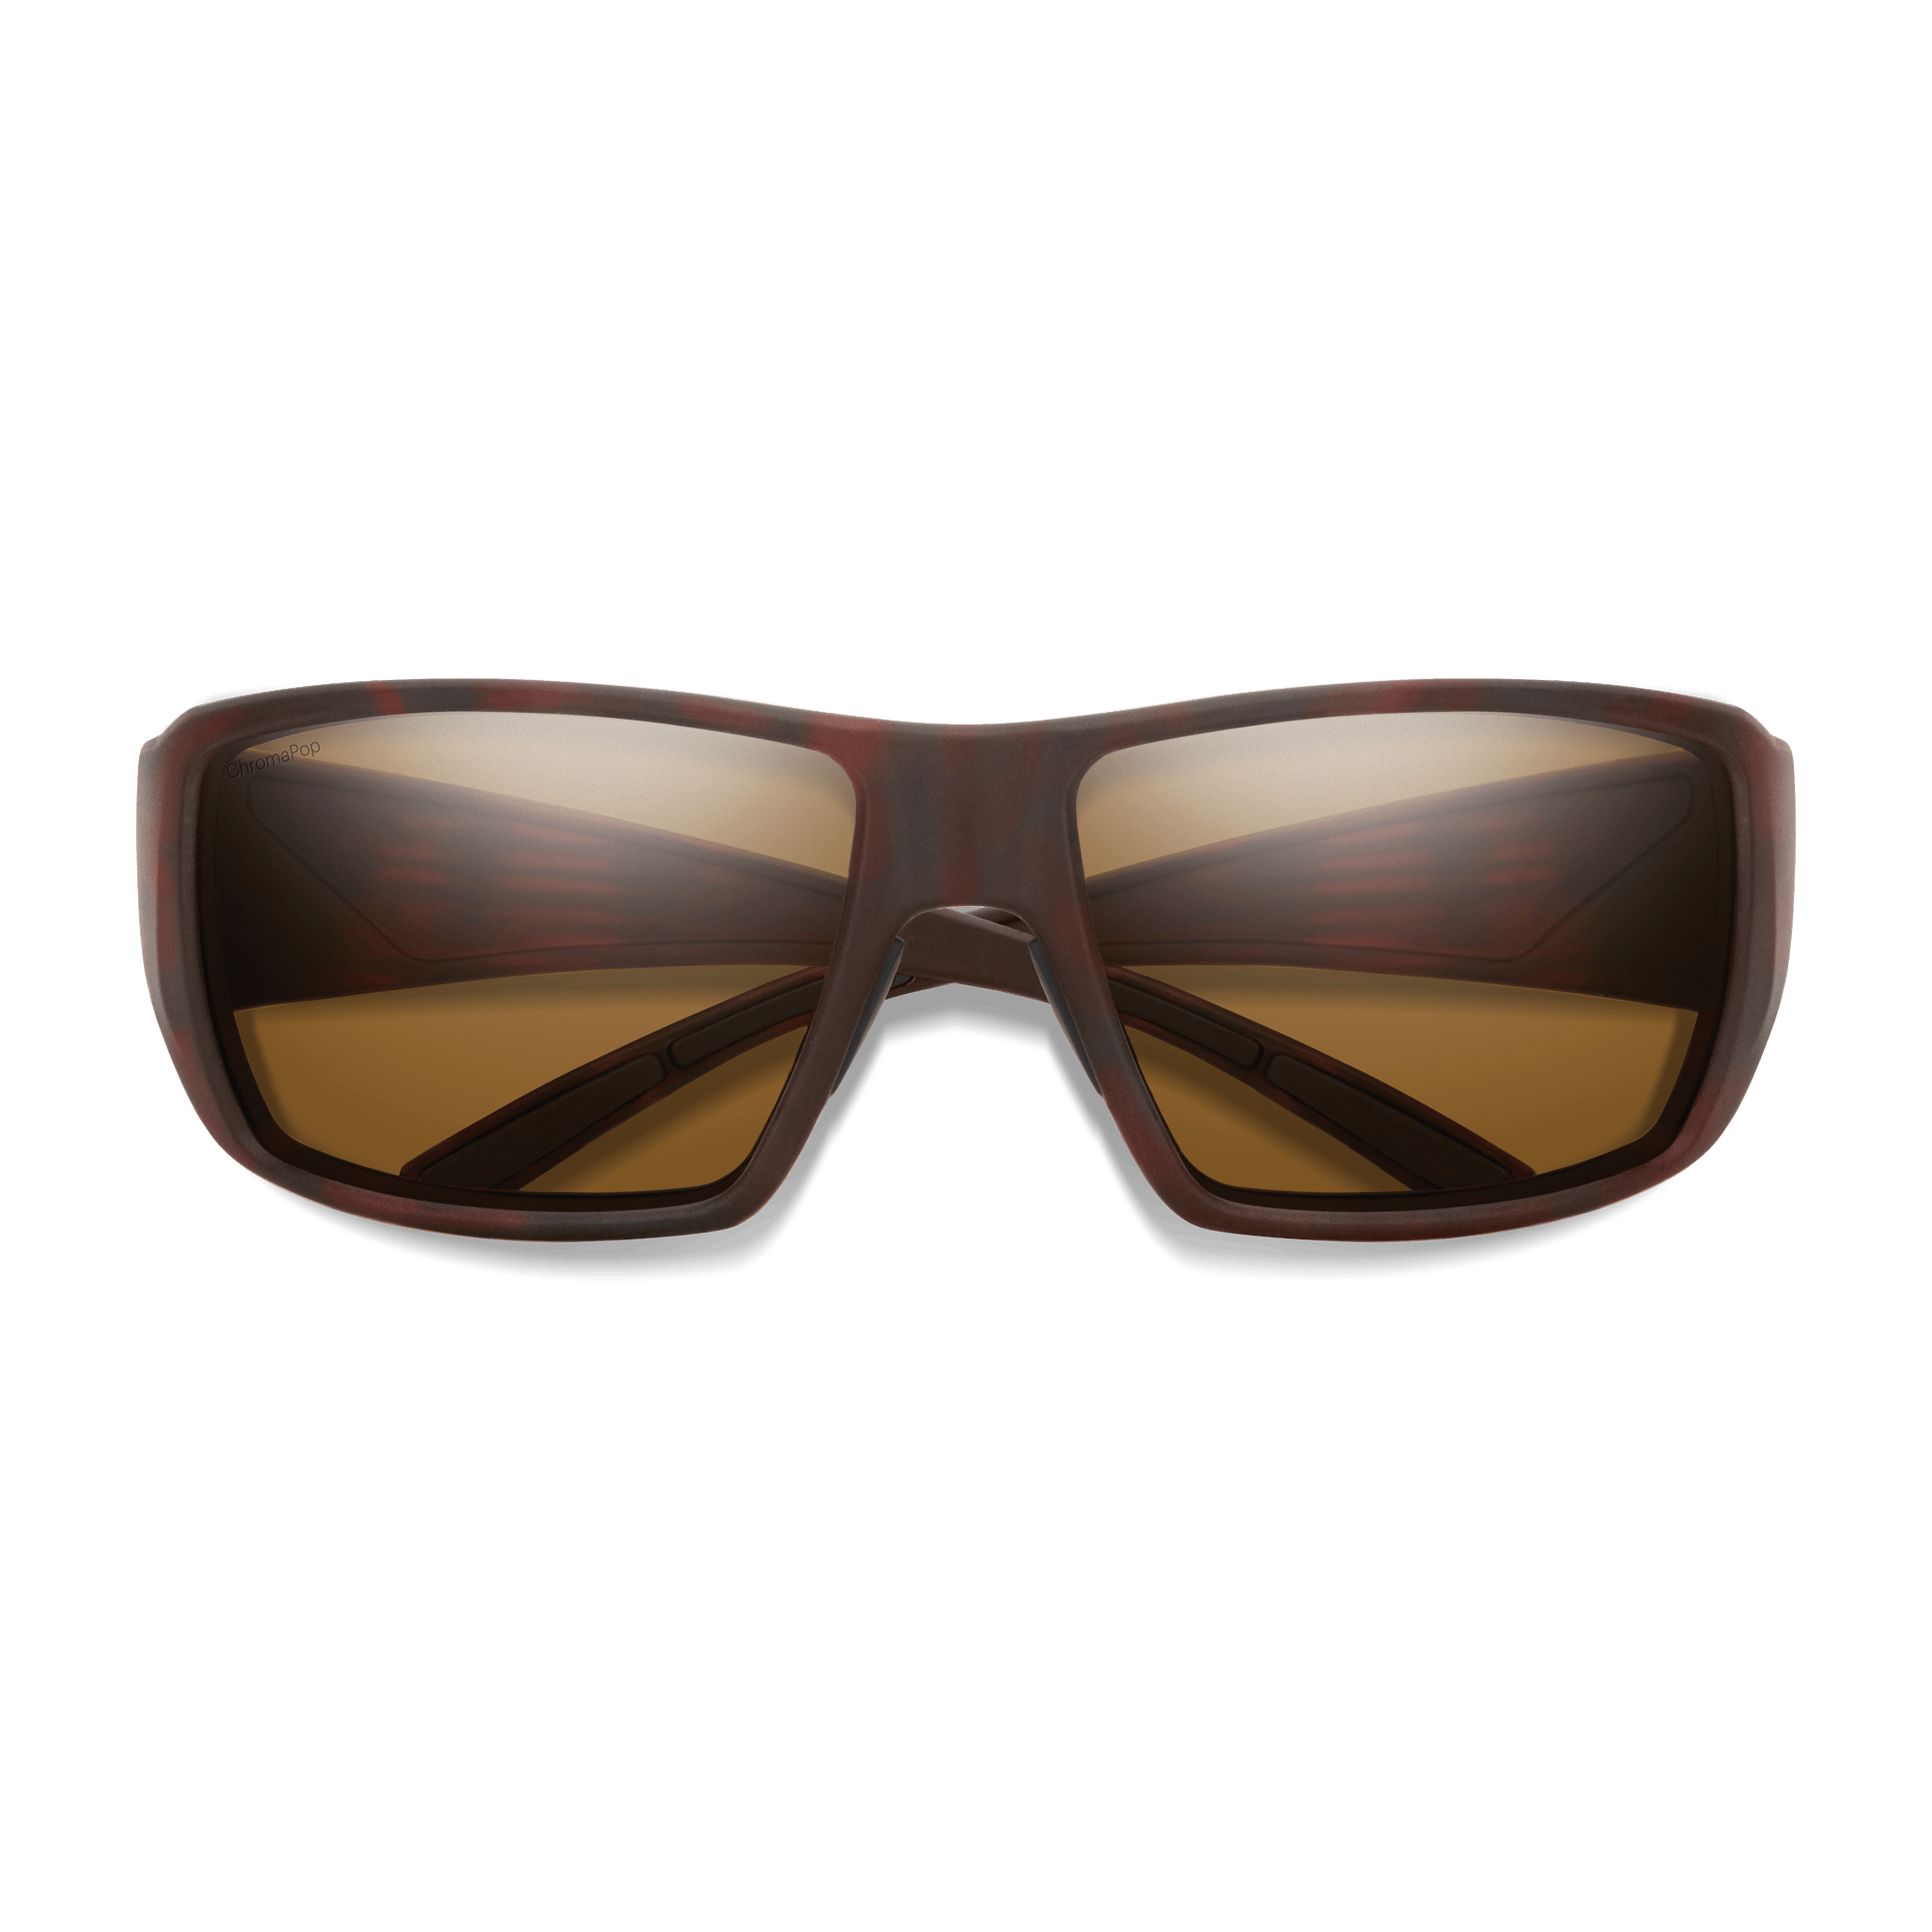 Guide's Choice, Matte Tortoise + ChromaPop Glass Polarized Brown Lens, hi-res